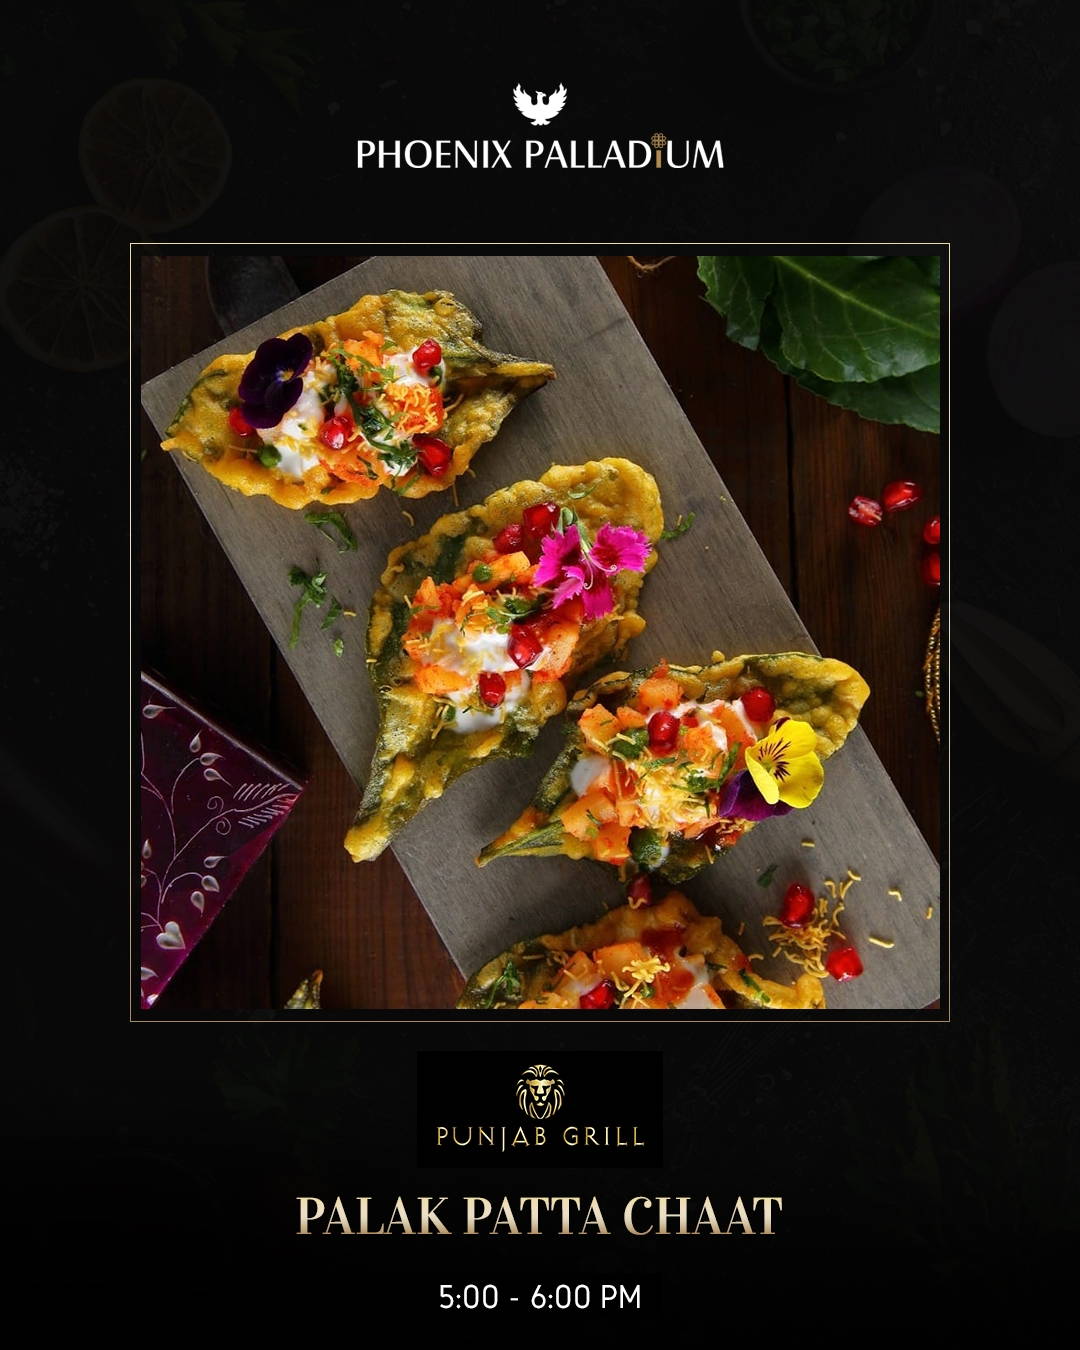 Cooking Masterclass at Punjab Grill - Phoenix Palladium Mumbai